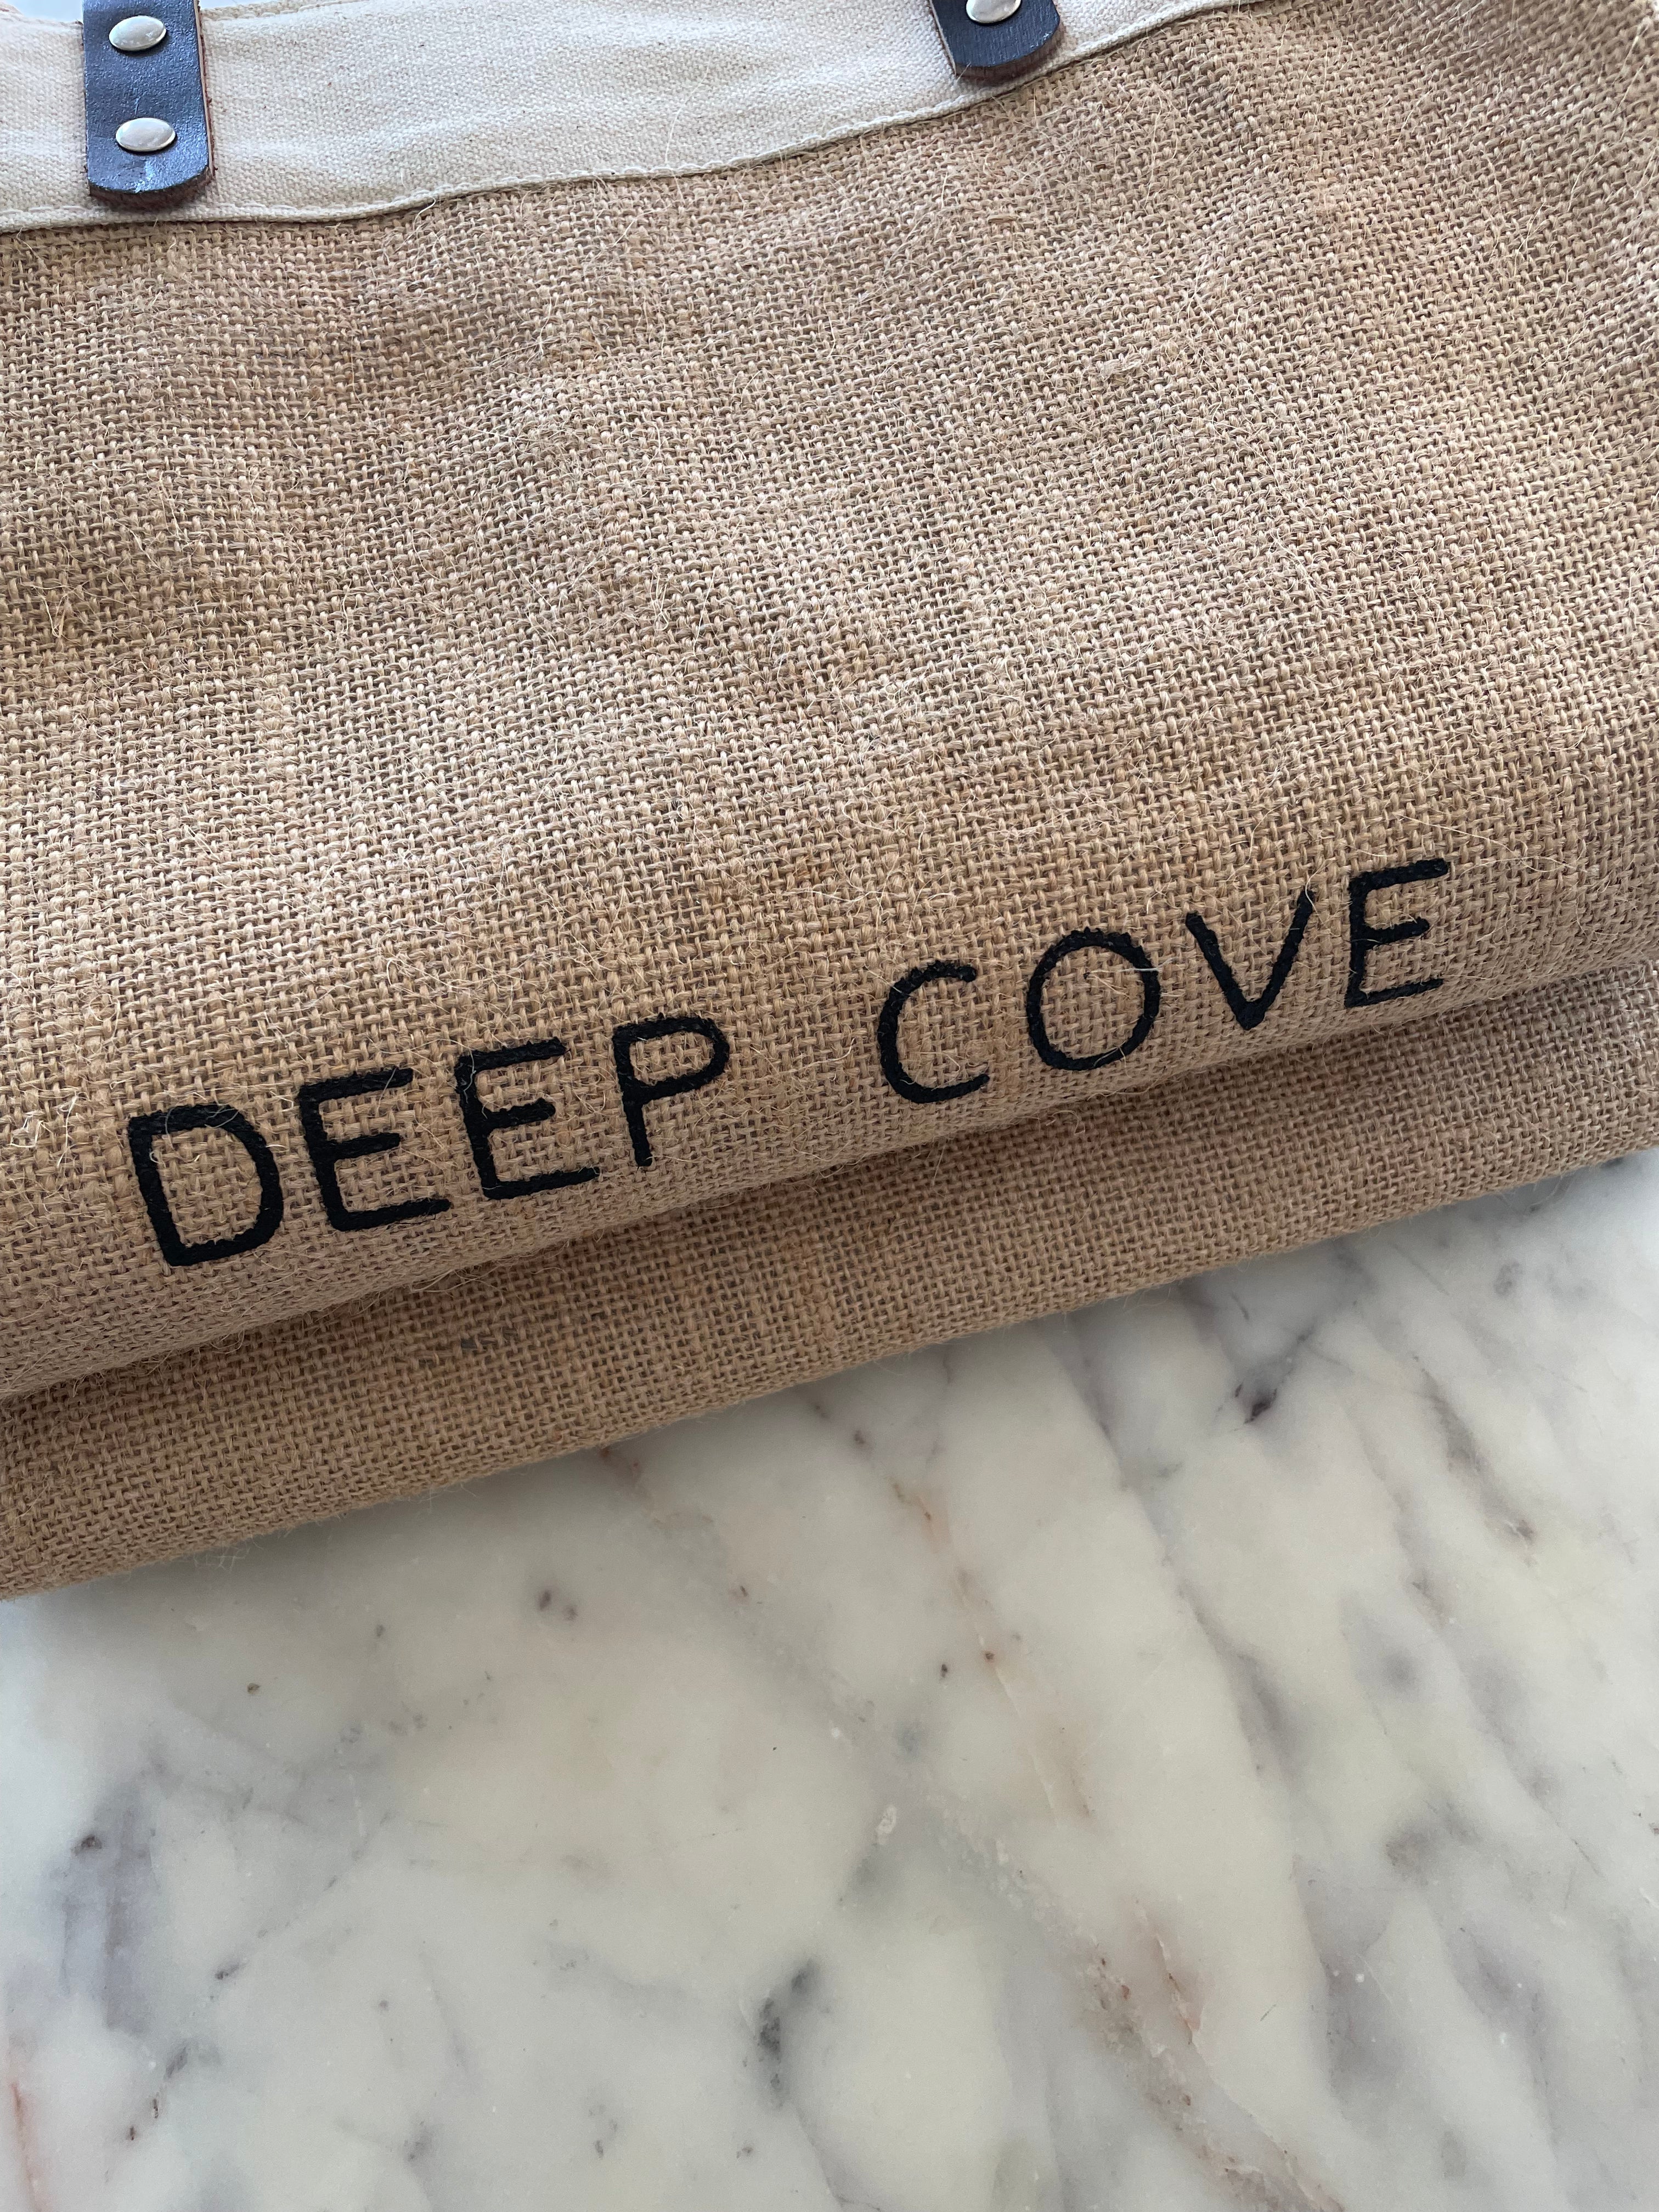 Deep Cove Large Market Bag